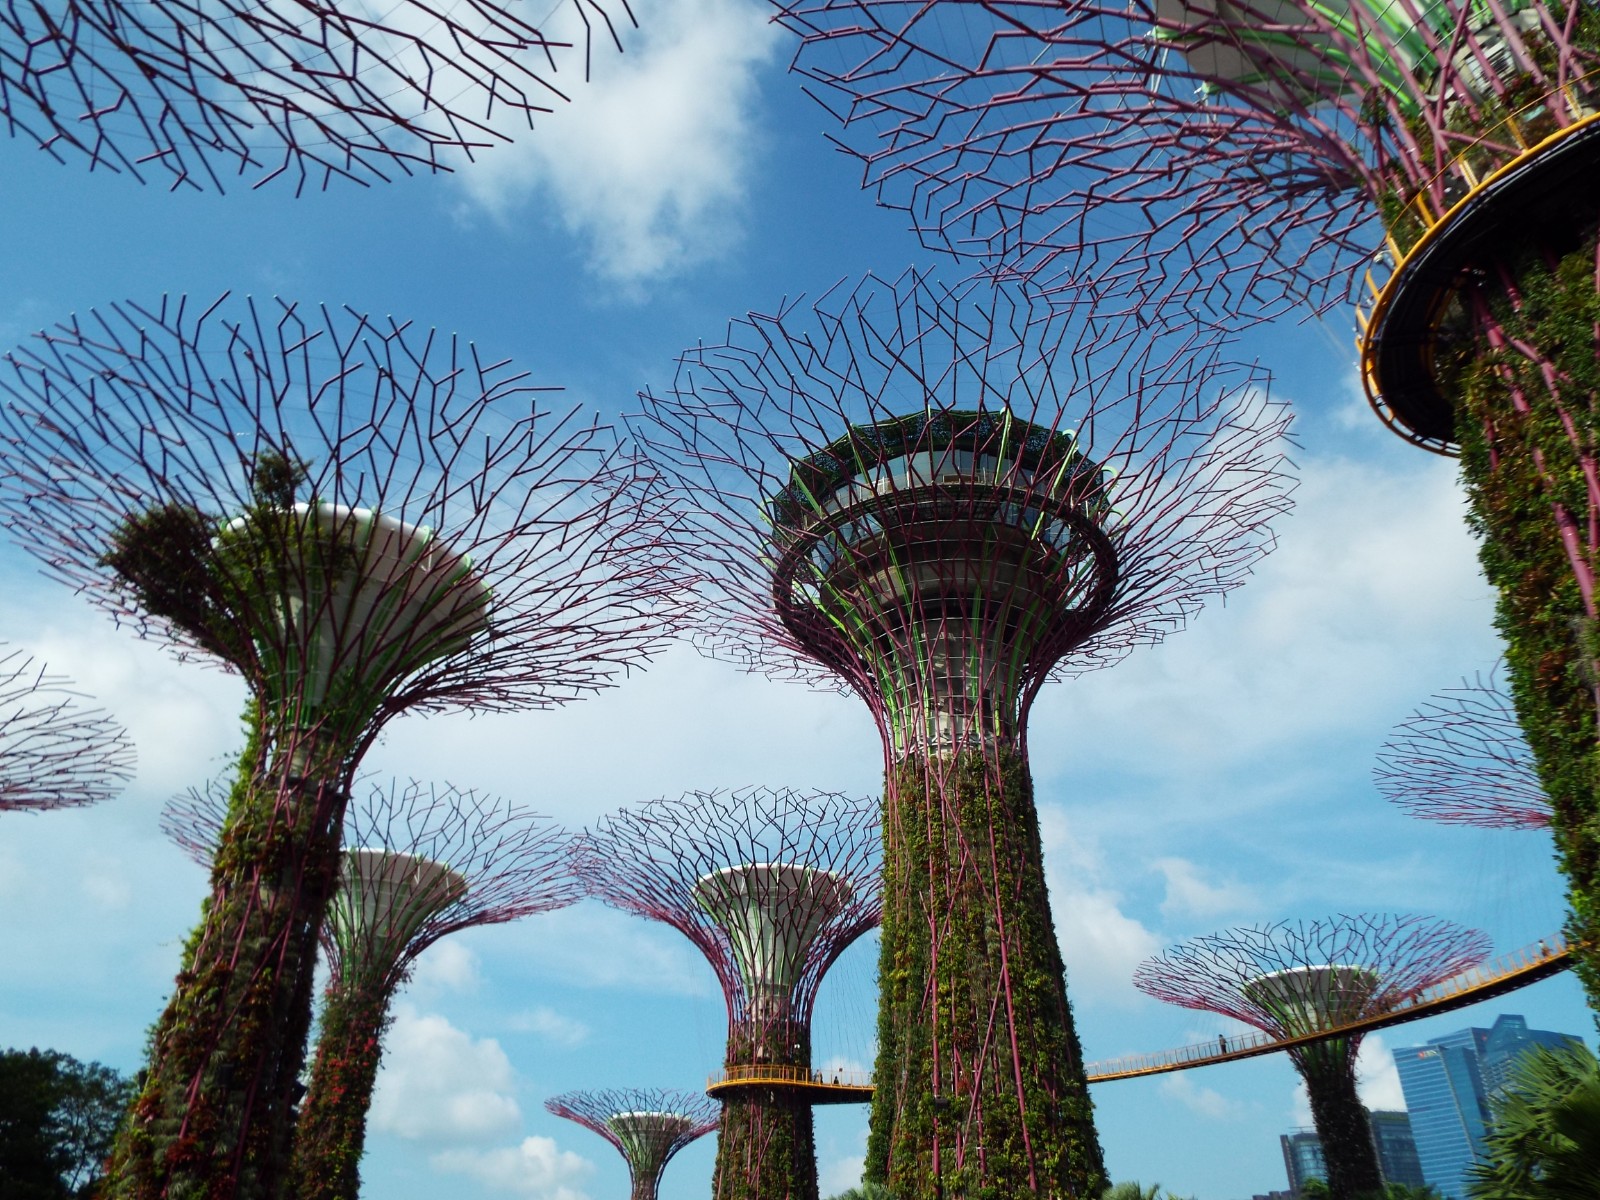 Supertree grove, Tree | Plant | Green | Architecture | Bridge | City | Sky | Singapore | People | Shade | Shadow | Sun | Sunlight | Sunshade